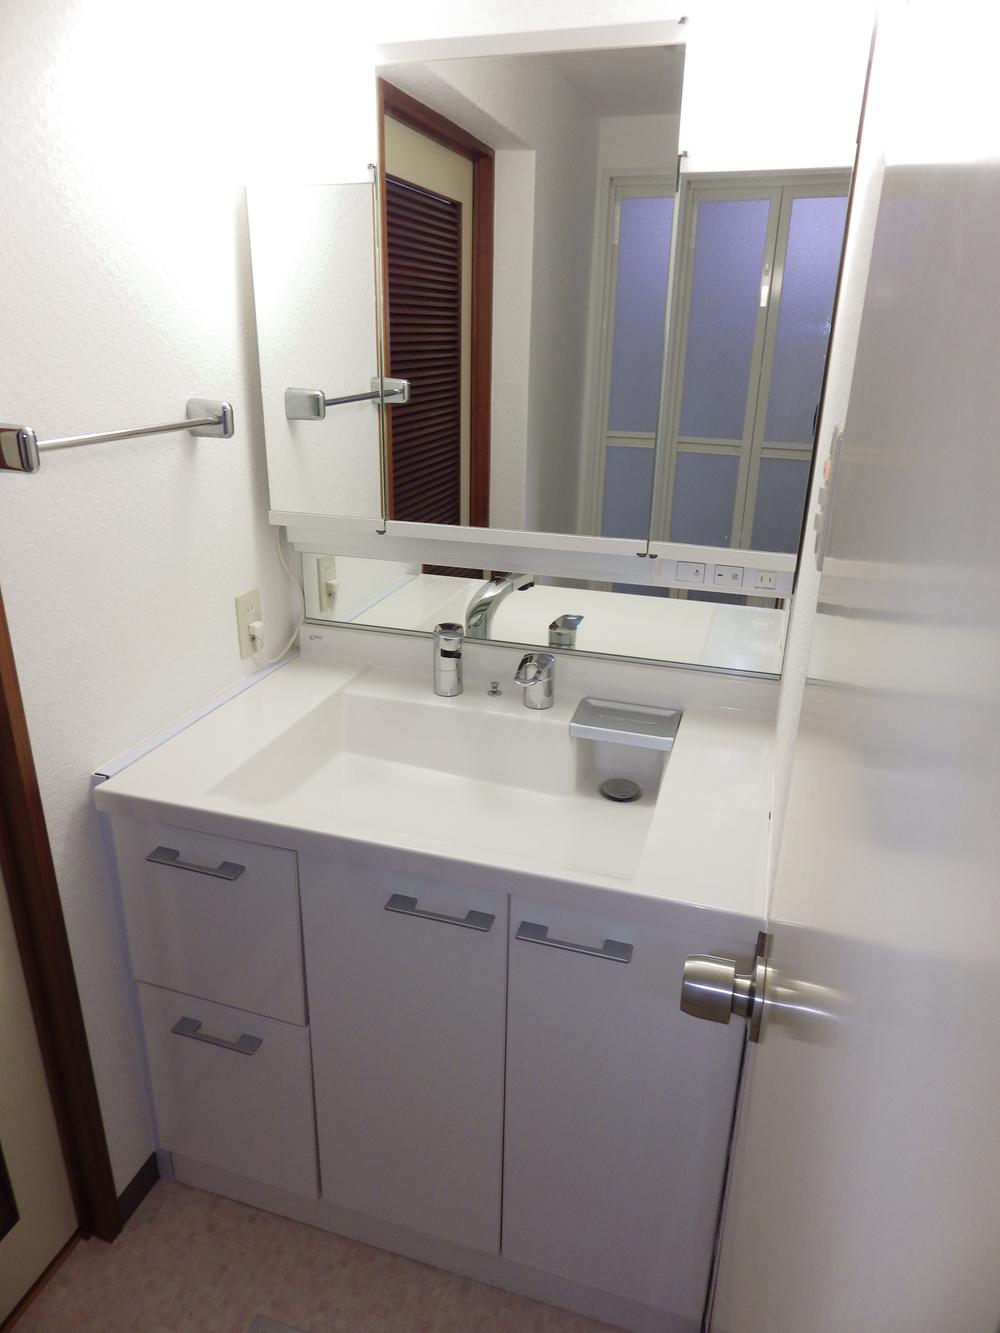 Wash basin, toilet. Vanity of bright large mirror